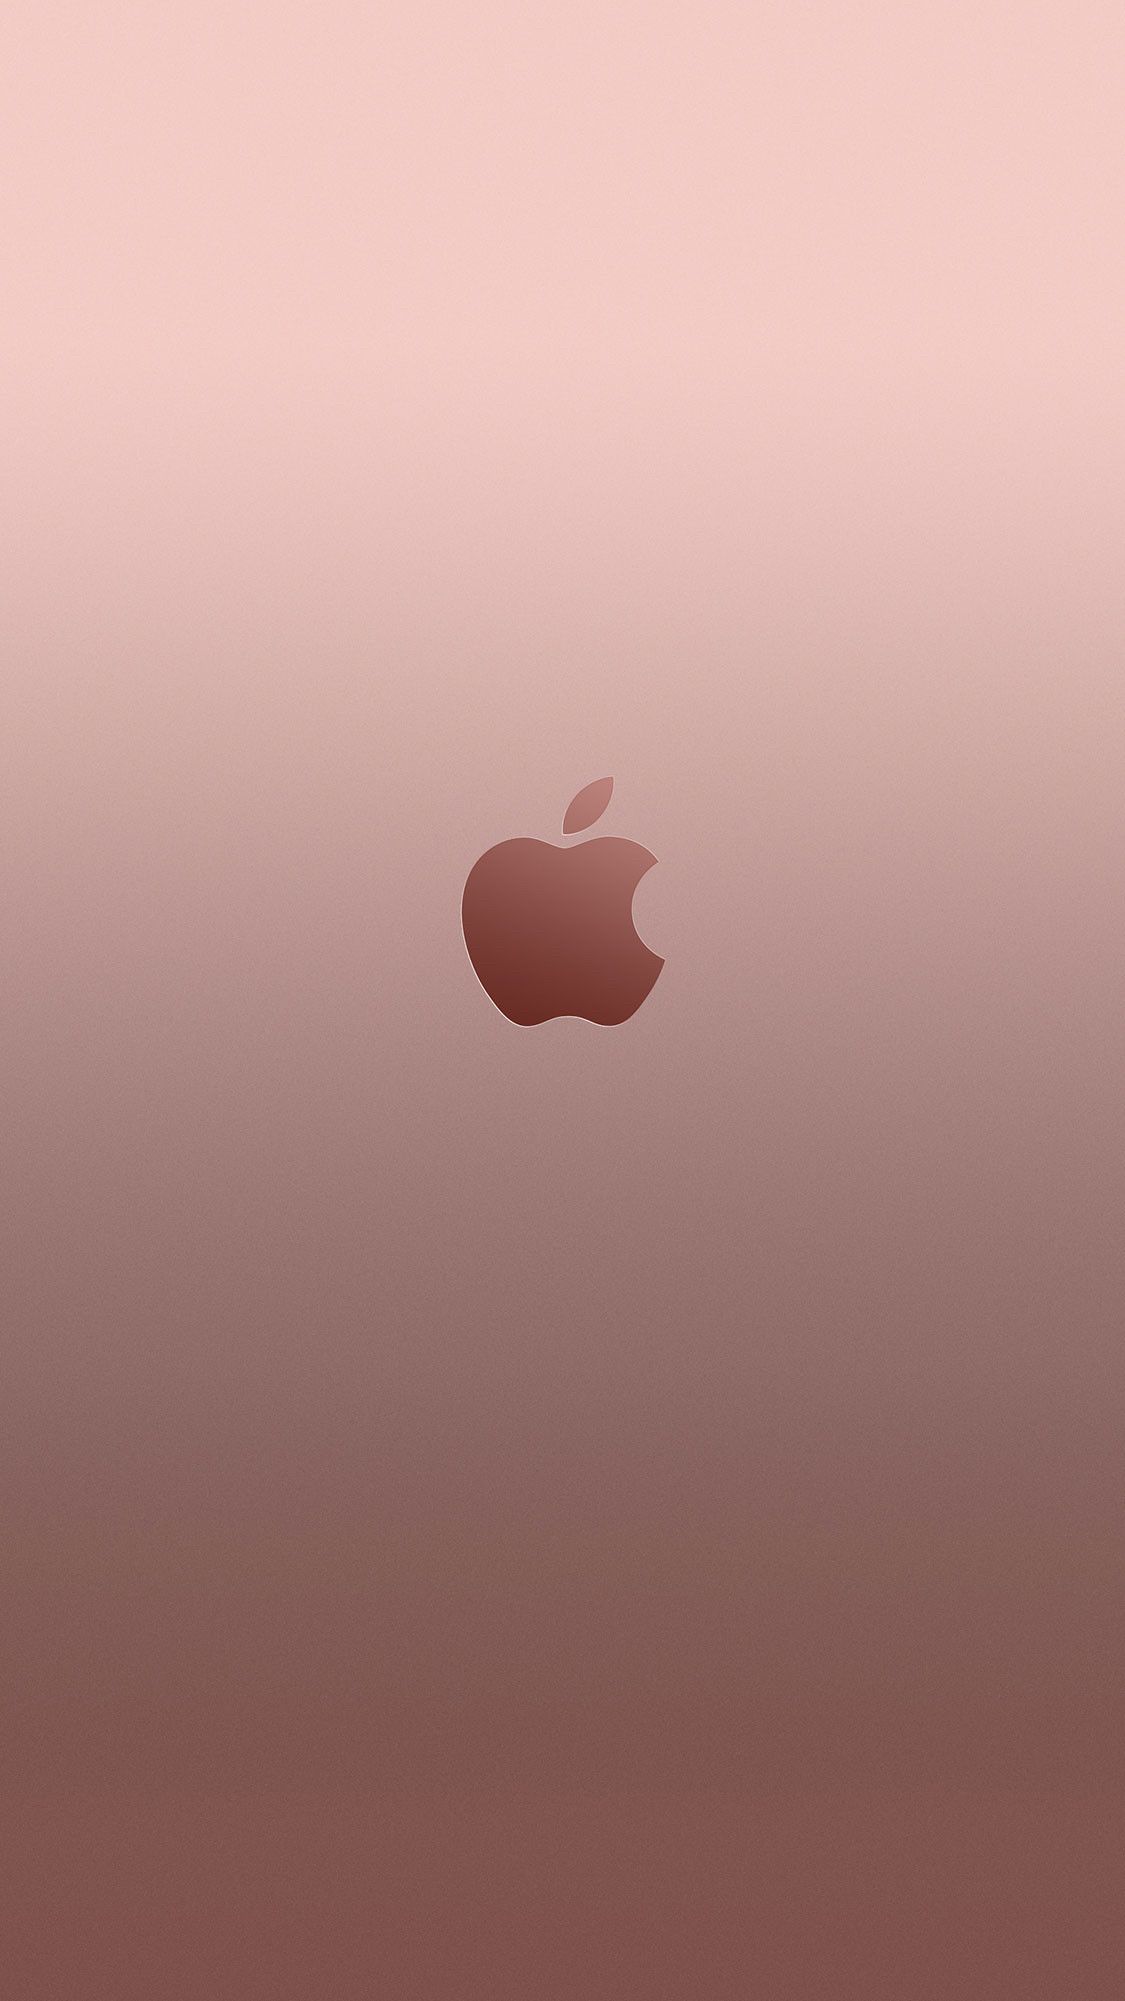 Apple Rosa Hintergrundbild 1125x2001. Rosegold iPhone 6 wallpaper Â· Hintergrundbilder. Rose gold wallpaper, iPhone 6s wallpaper, iPhone 6 wallpaper